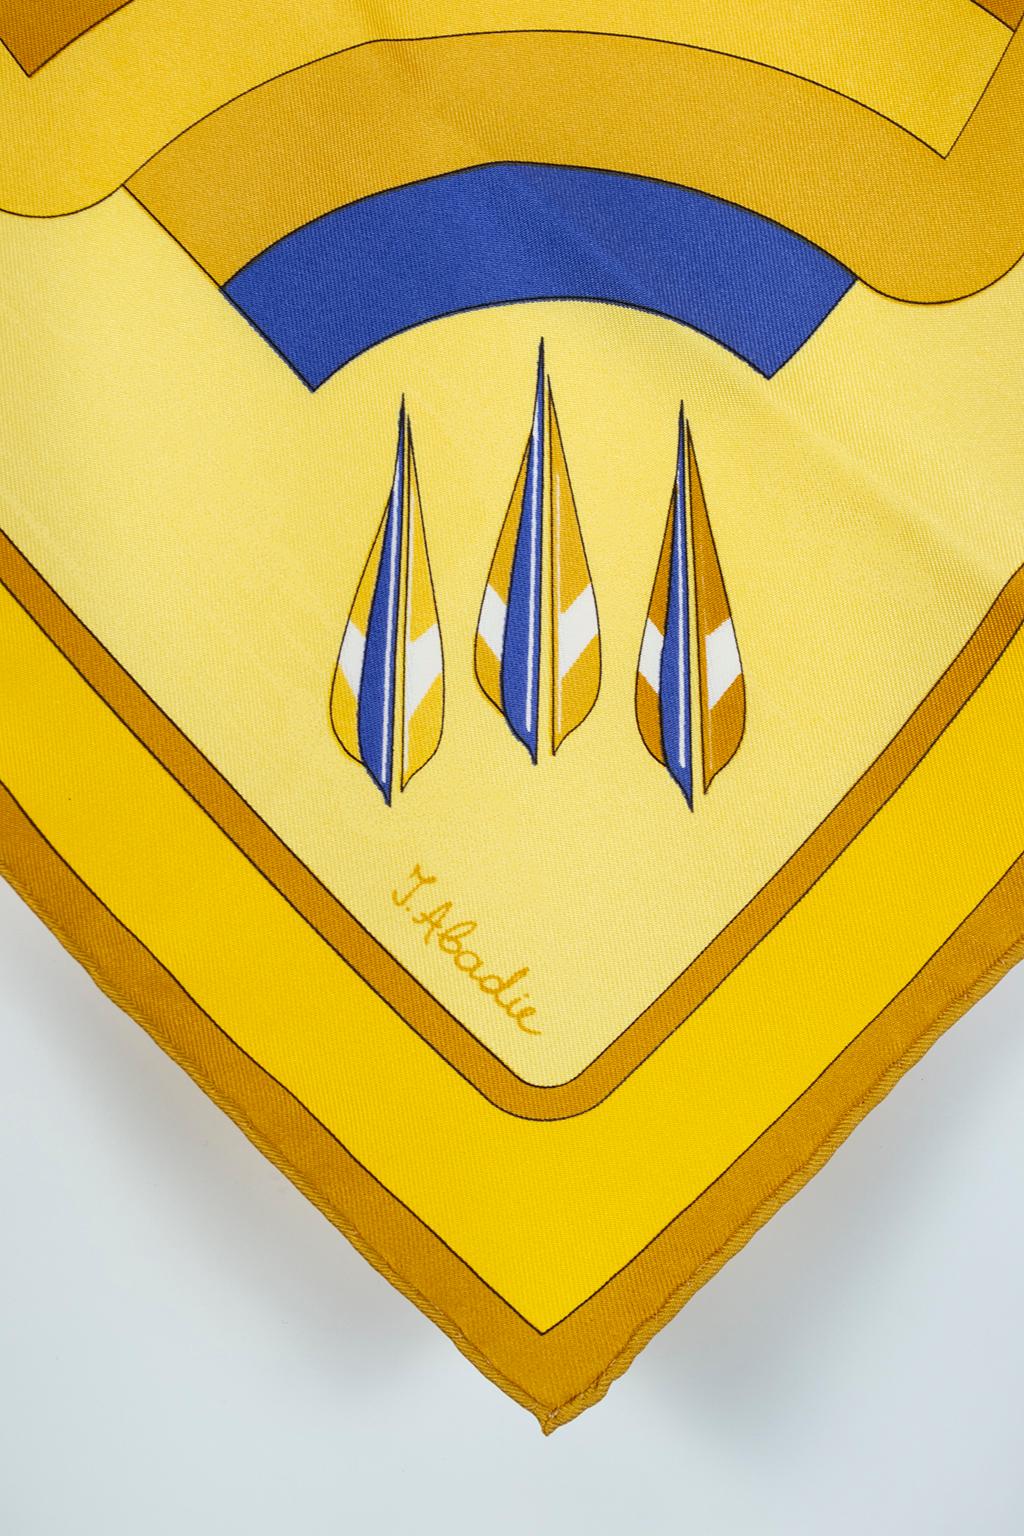 Hermès Yellow and French Blue Bullseye “Arcs en Ciel” Scarf – Julia Abadie, 1980 3